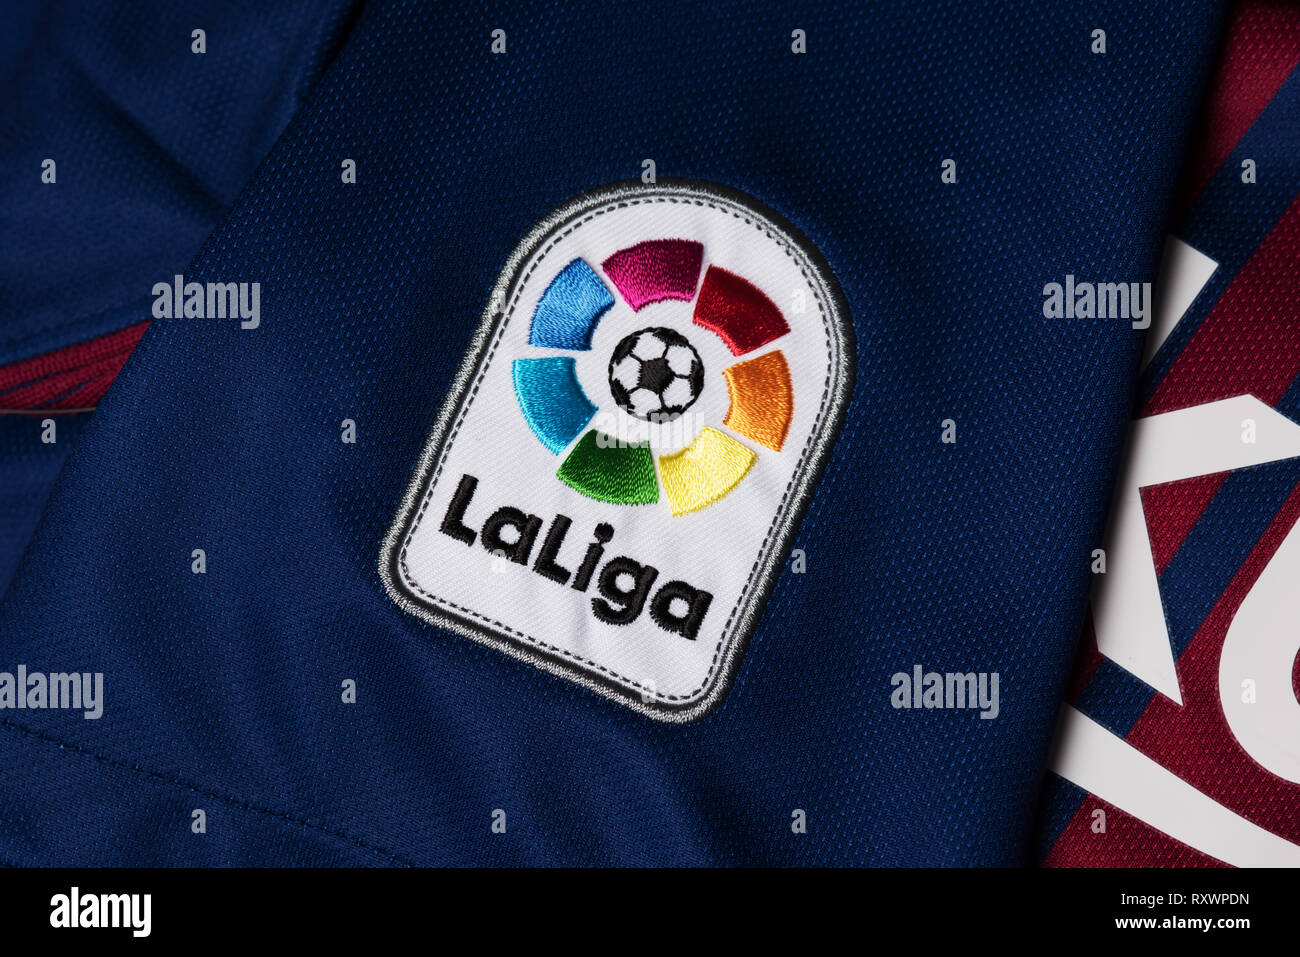 Close up of La Liga badge on an FC Barcelona jersey. Stock Photo